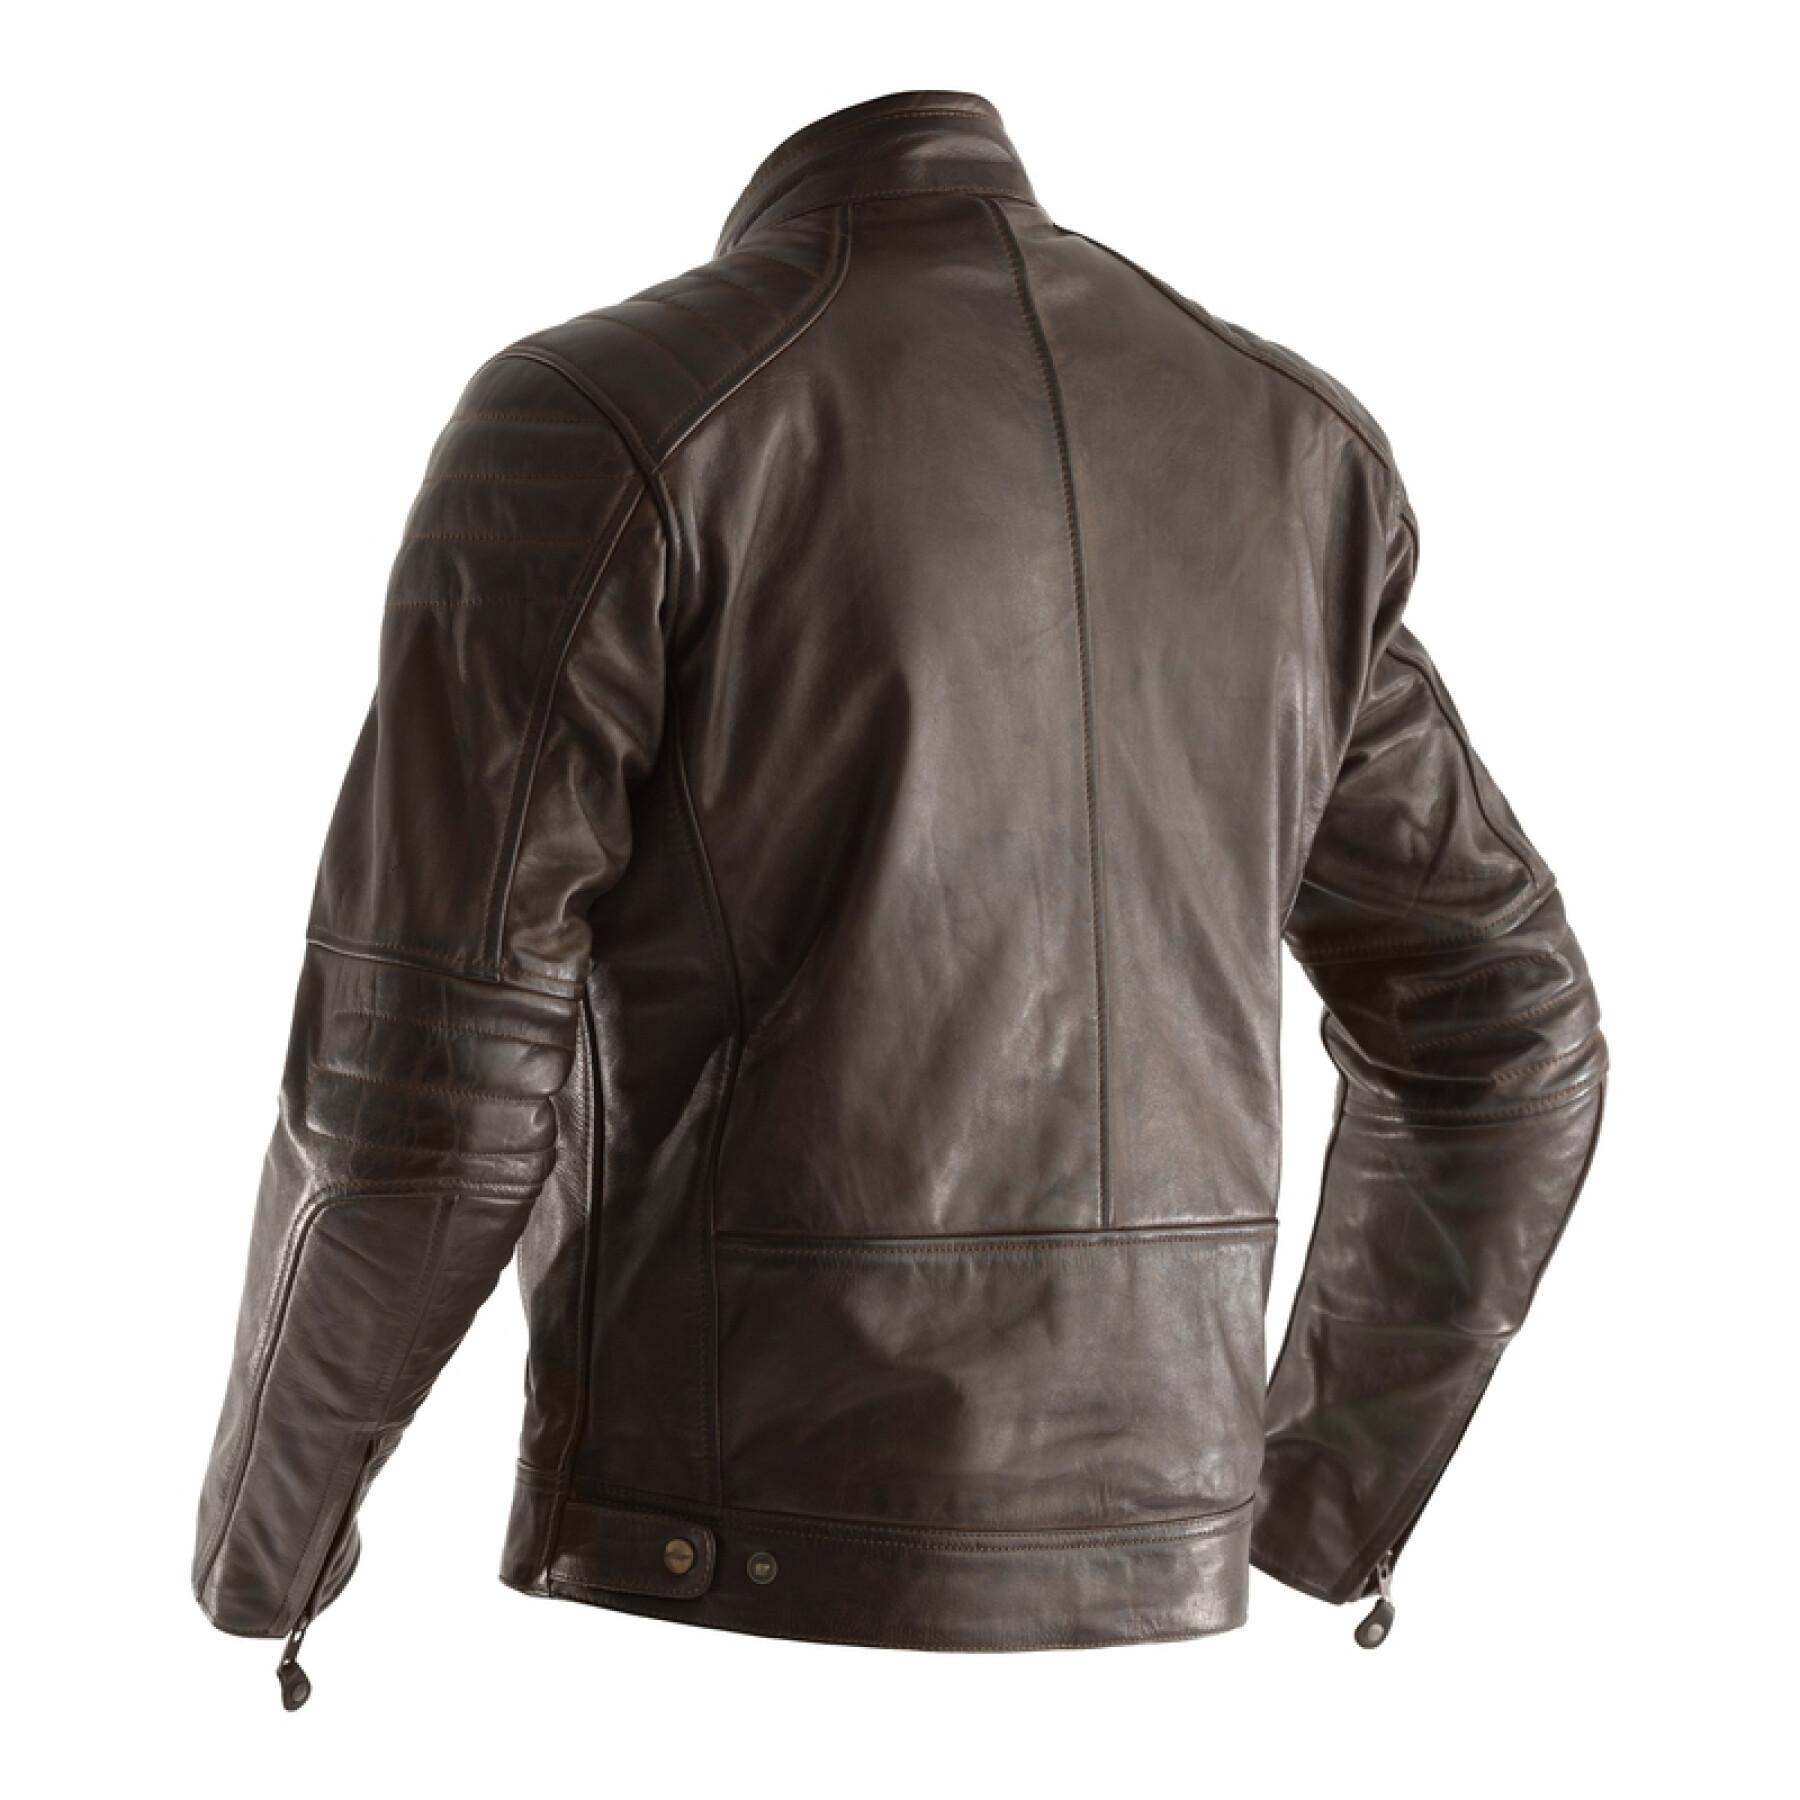 Motorcycle leather jacket RST Roadster II